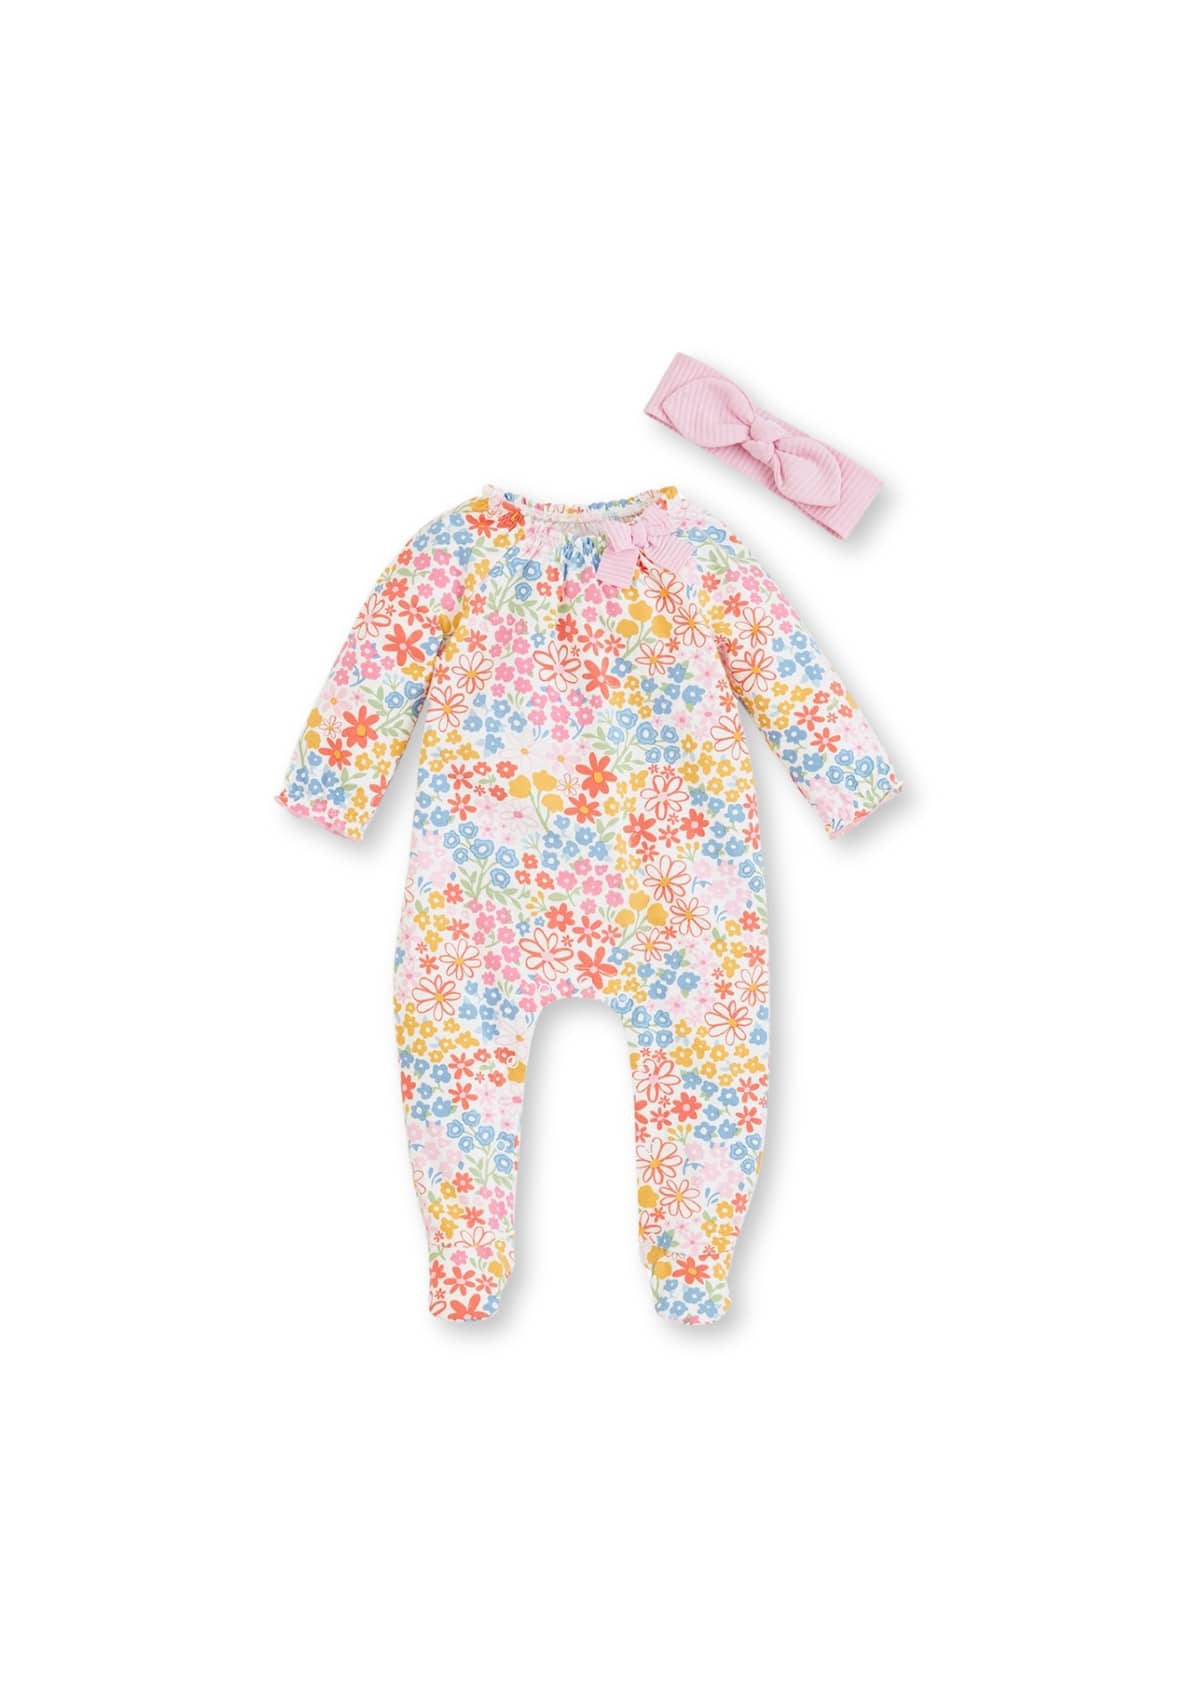 Clothing For the Littles-New Clothing For the Littles-Toddler + Preschooler-Ruby Jane.